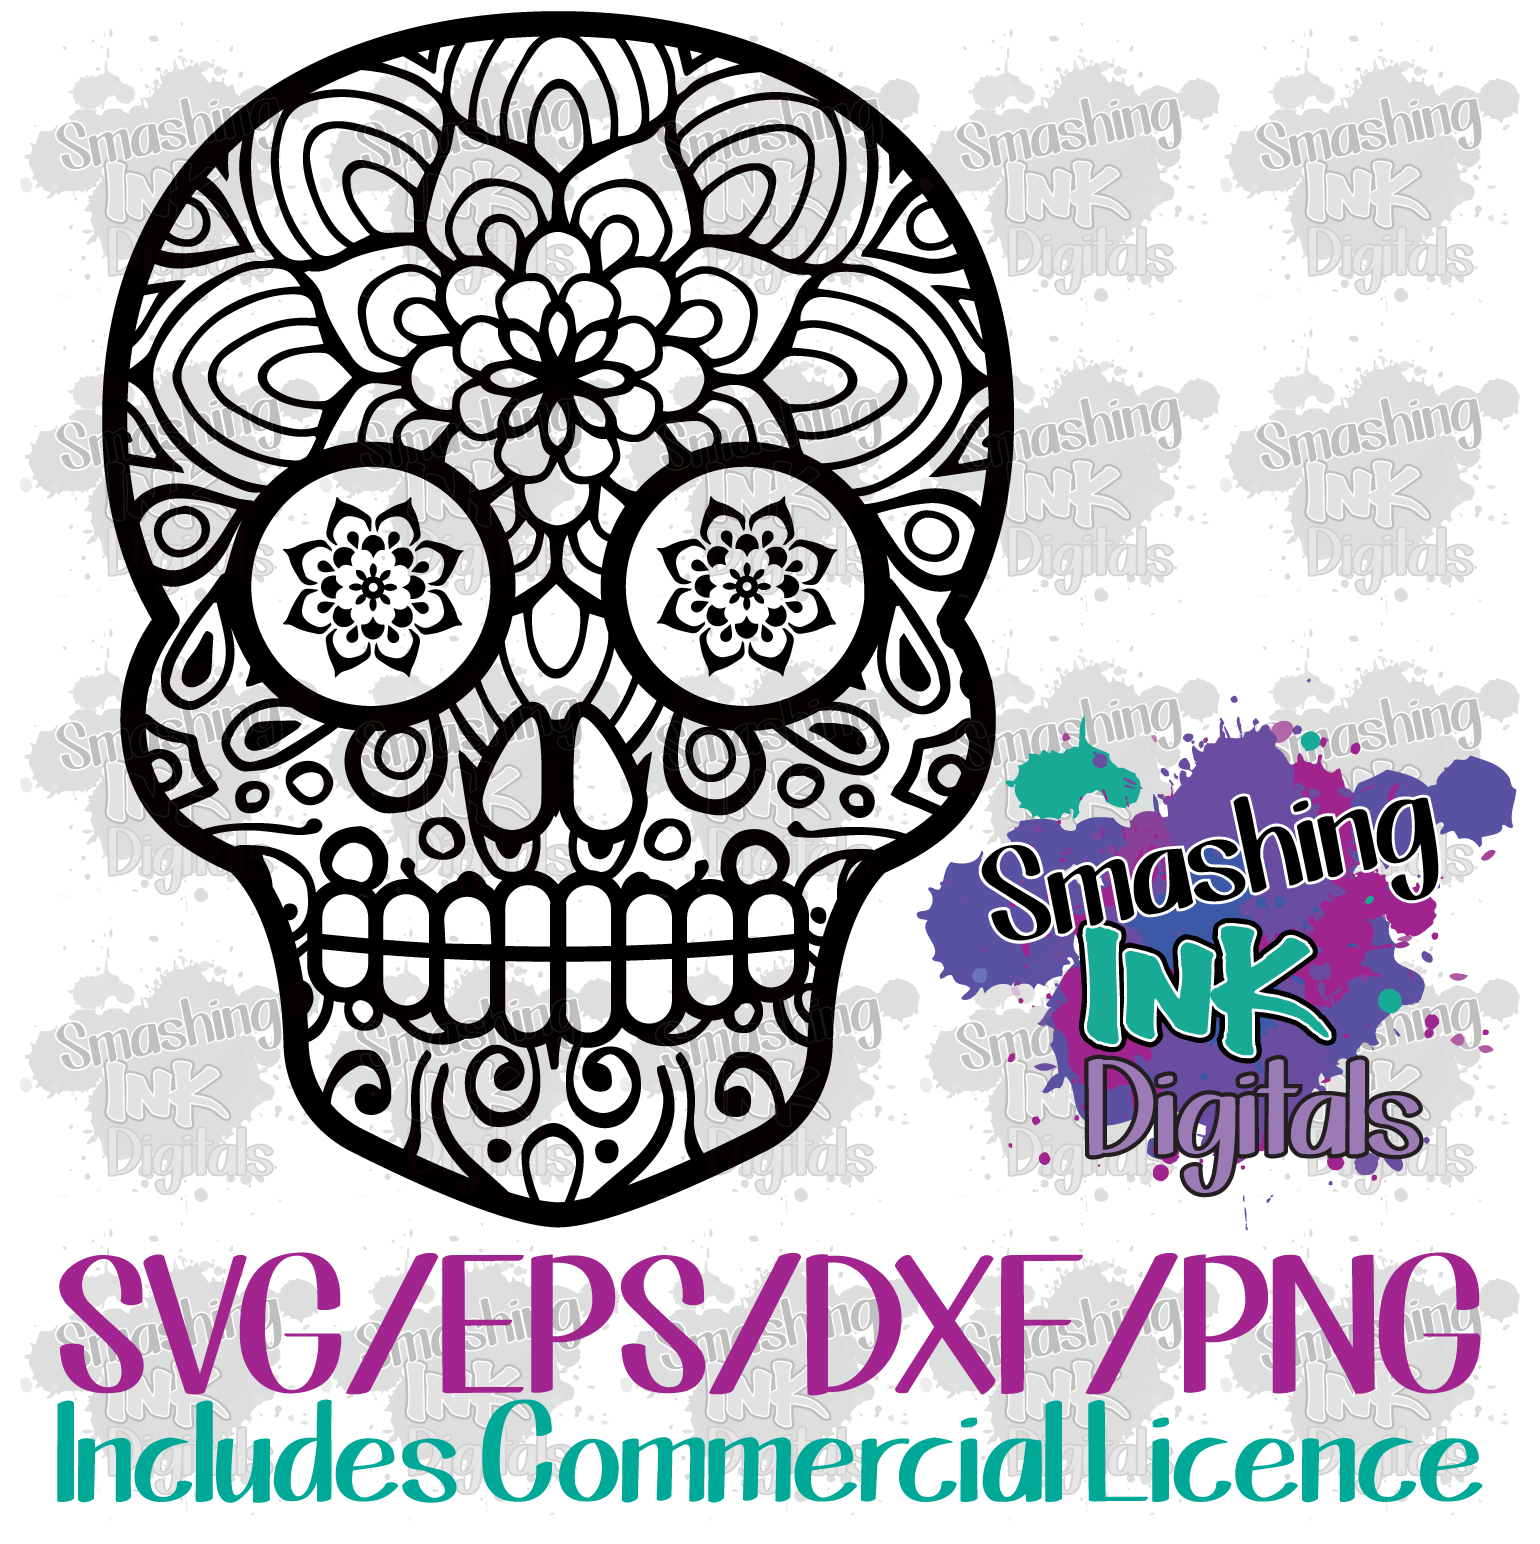 Free Free Mandala Skull Svg 513 SVG PNG EPS DXF File